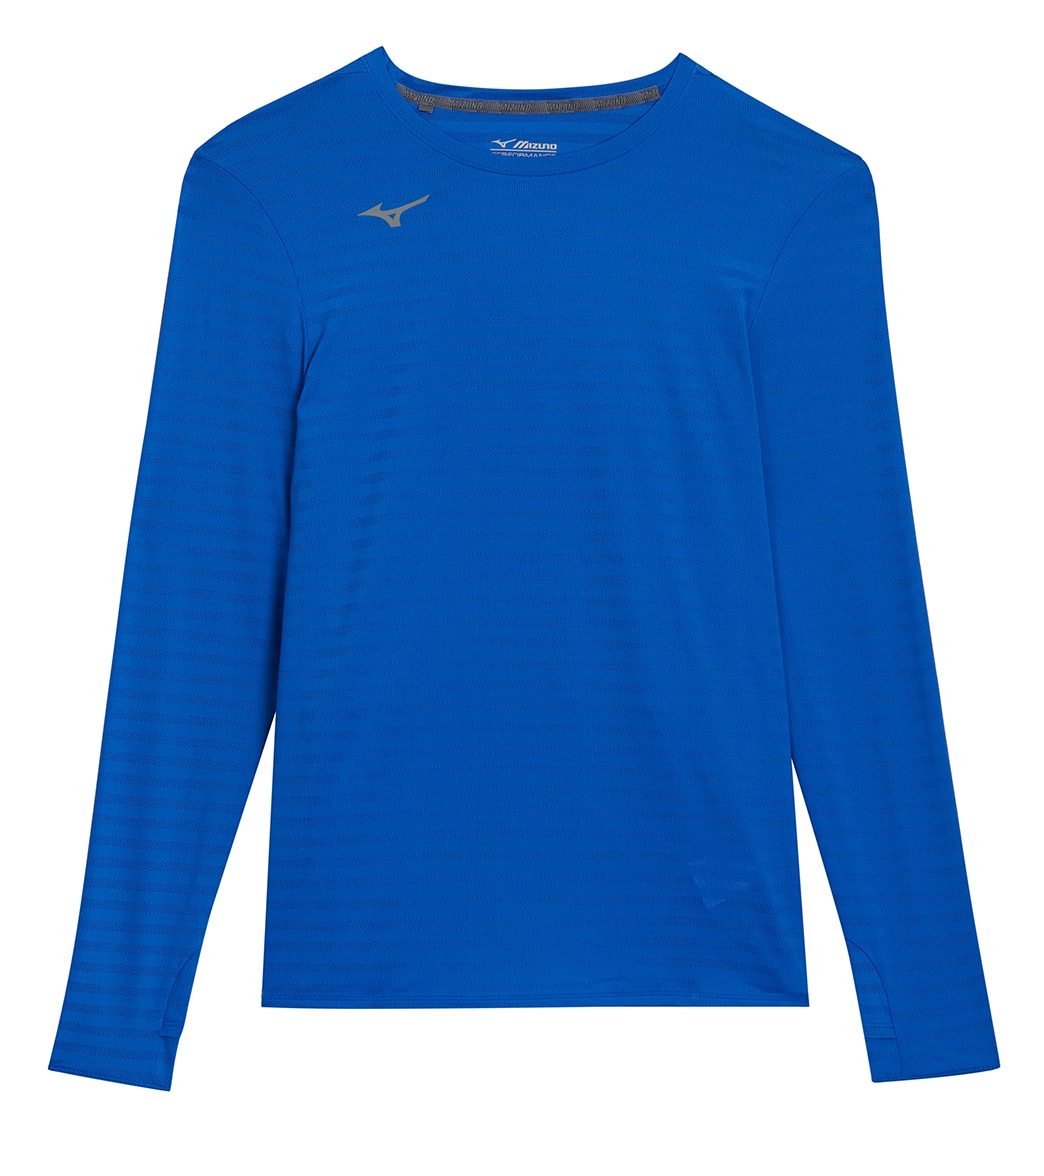 Mizuno Men's Athletic Eco Long Sleeve Top Shirt - Royal Large - Swimoutlet.com